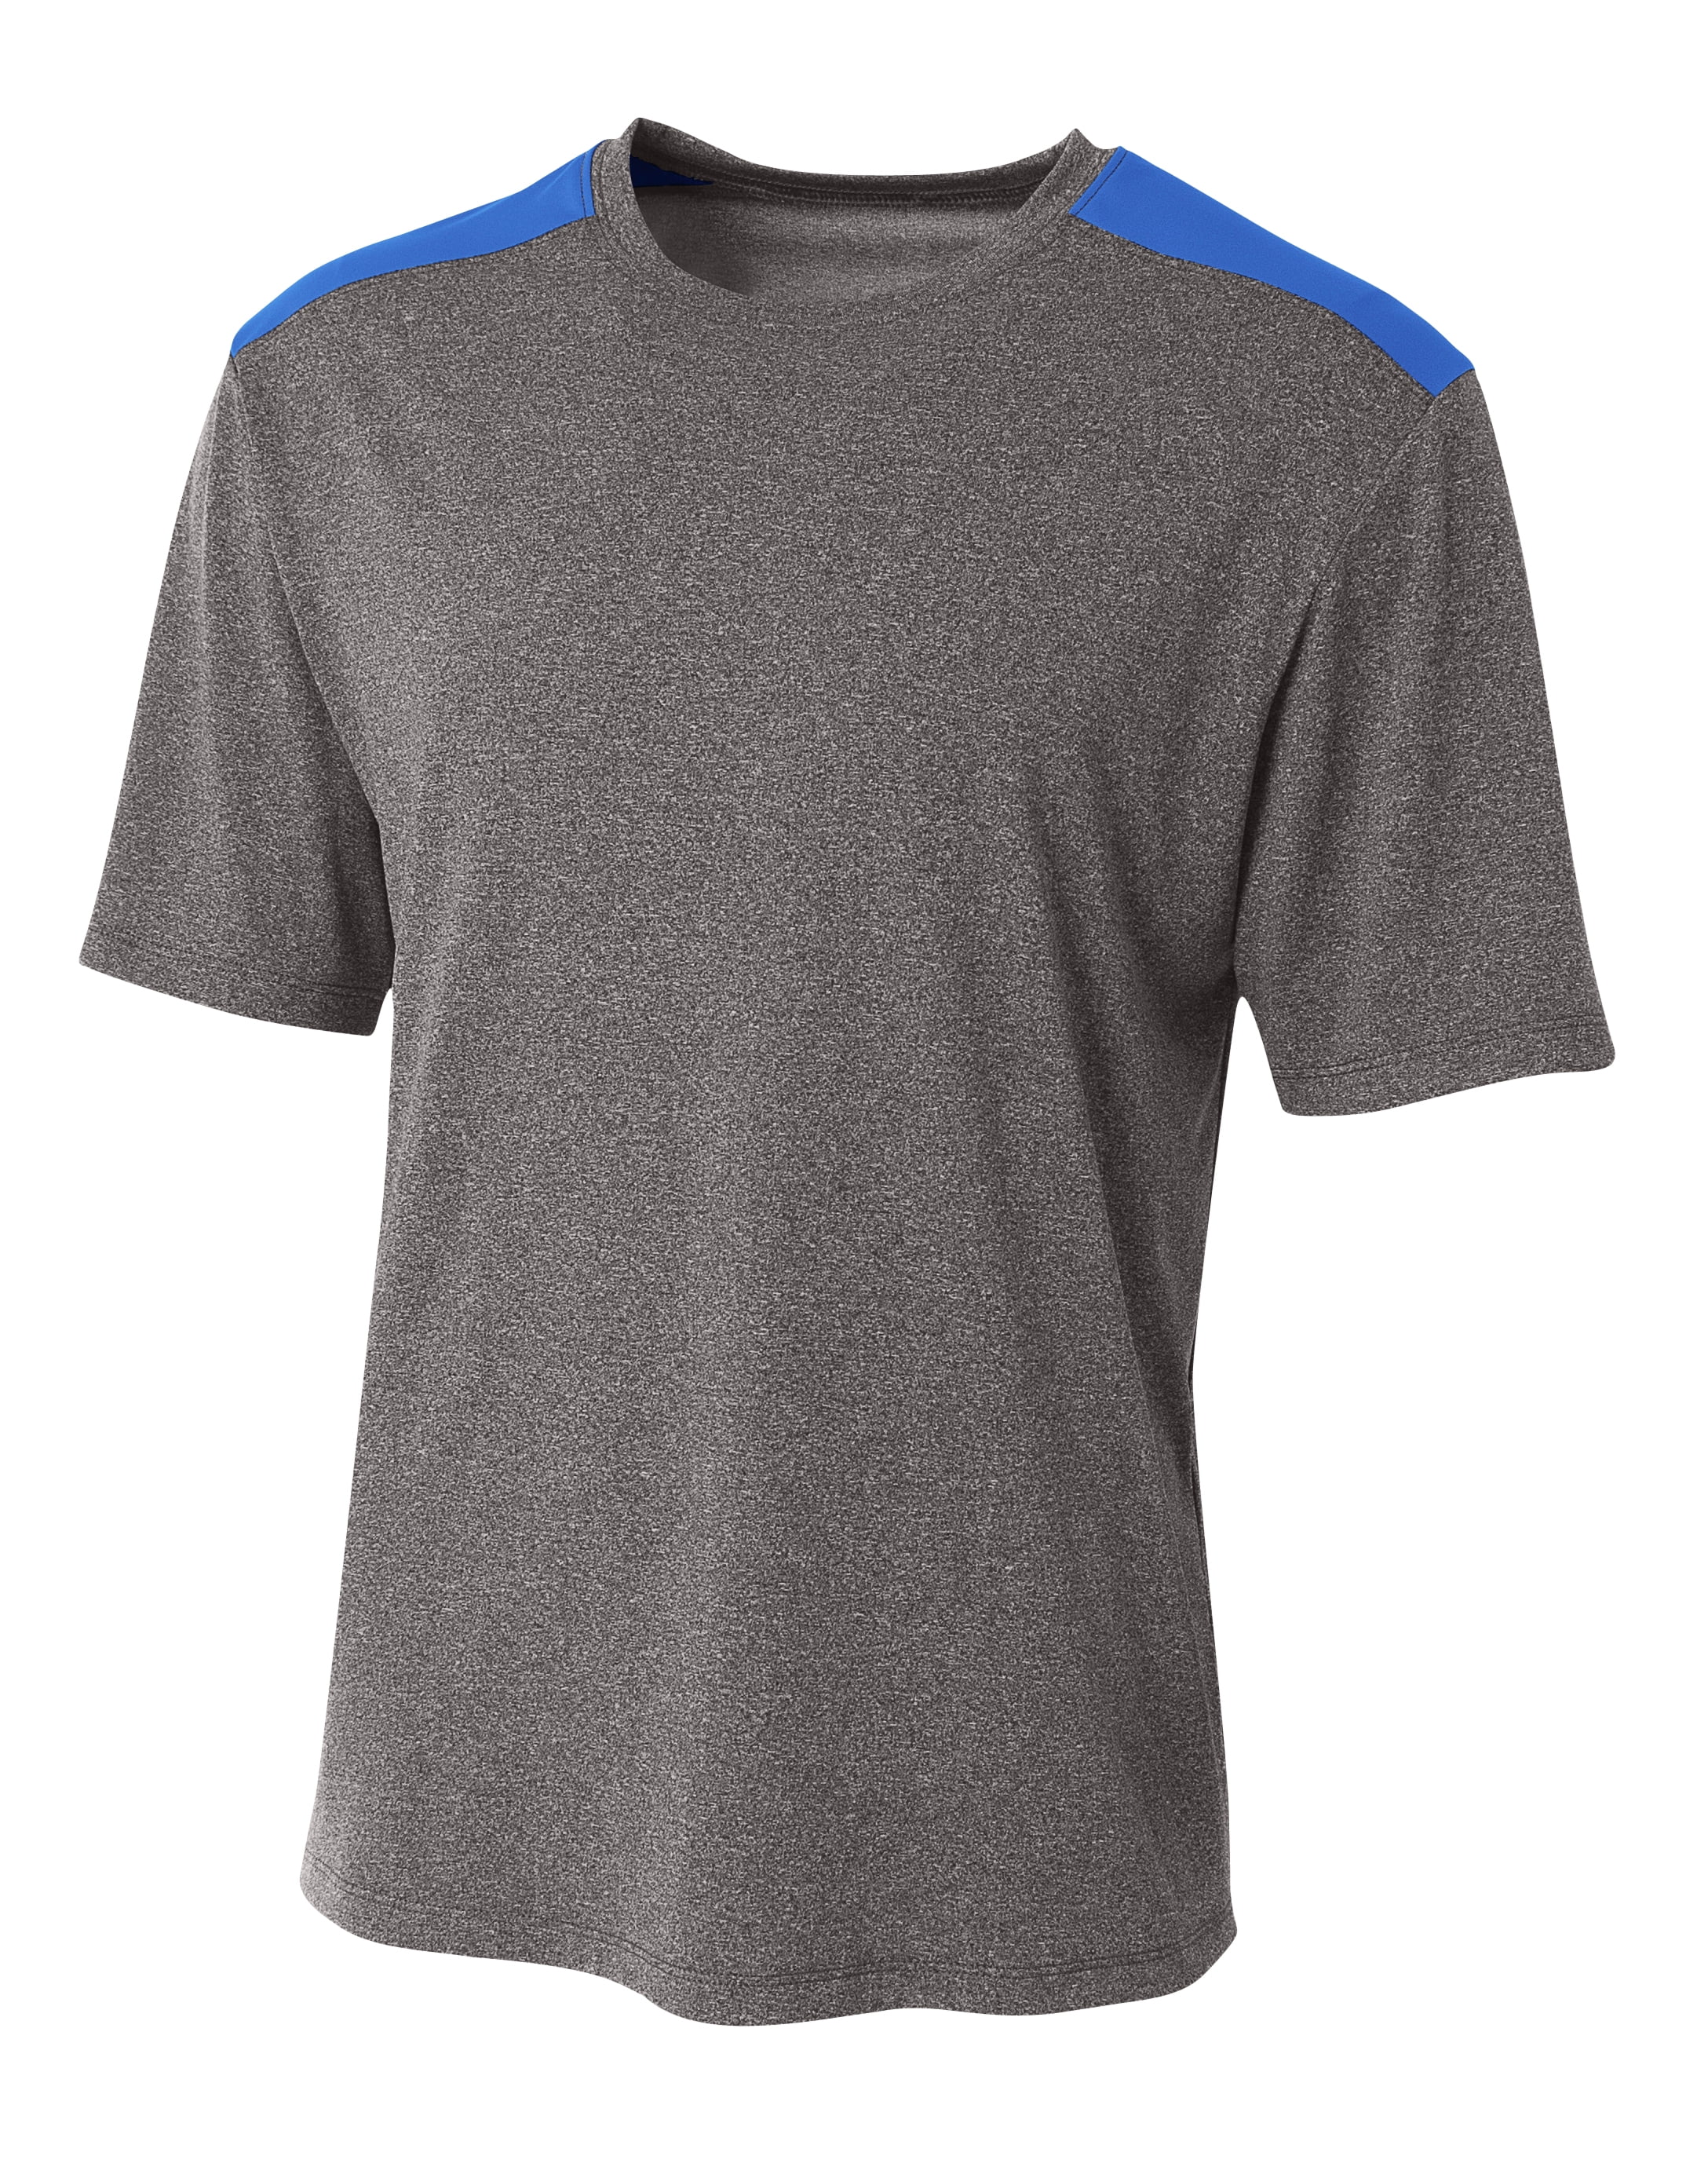 Youth & Adult S M L Baseball Shirt Short Sleeve Gray Black Polyester 